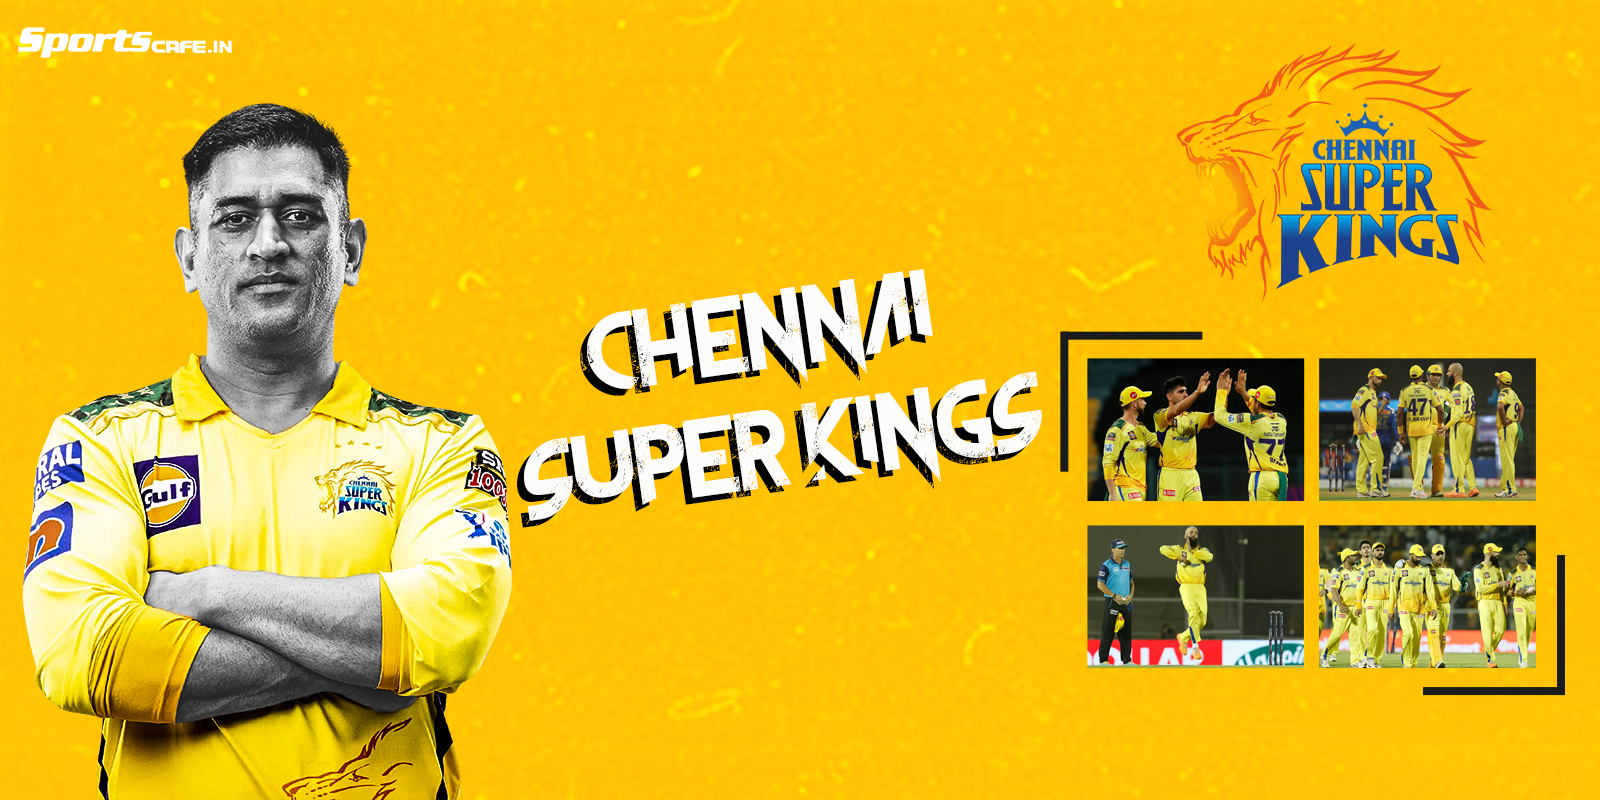 Chennai Super Kings in Mount Road,Chennai - Best Sports Clubs in Chennai -  Justdial